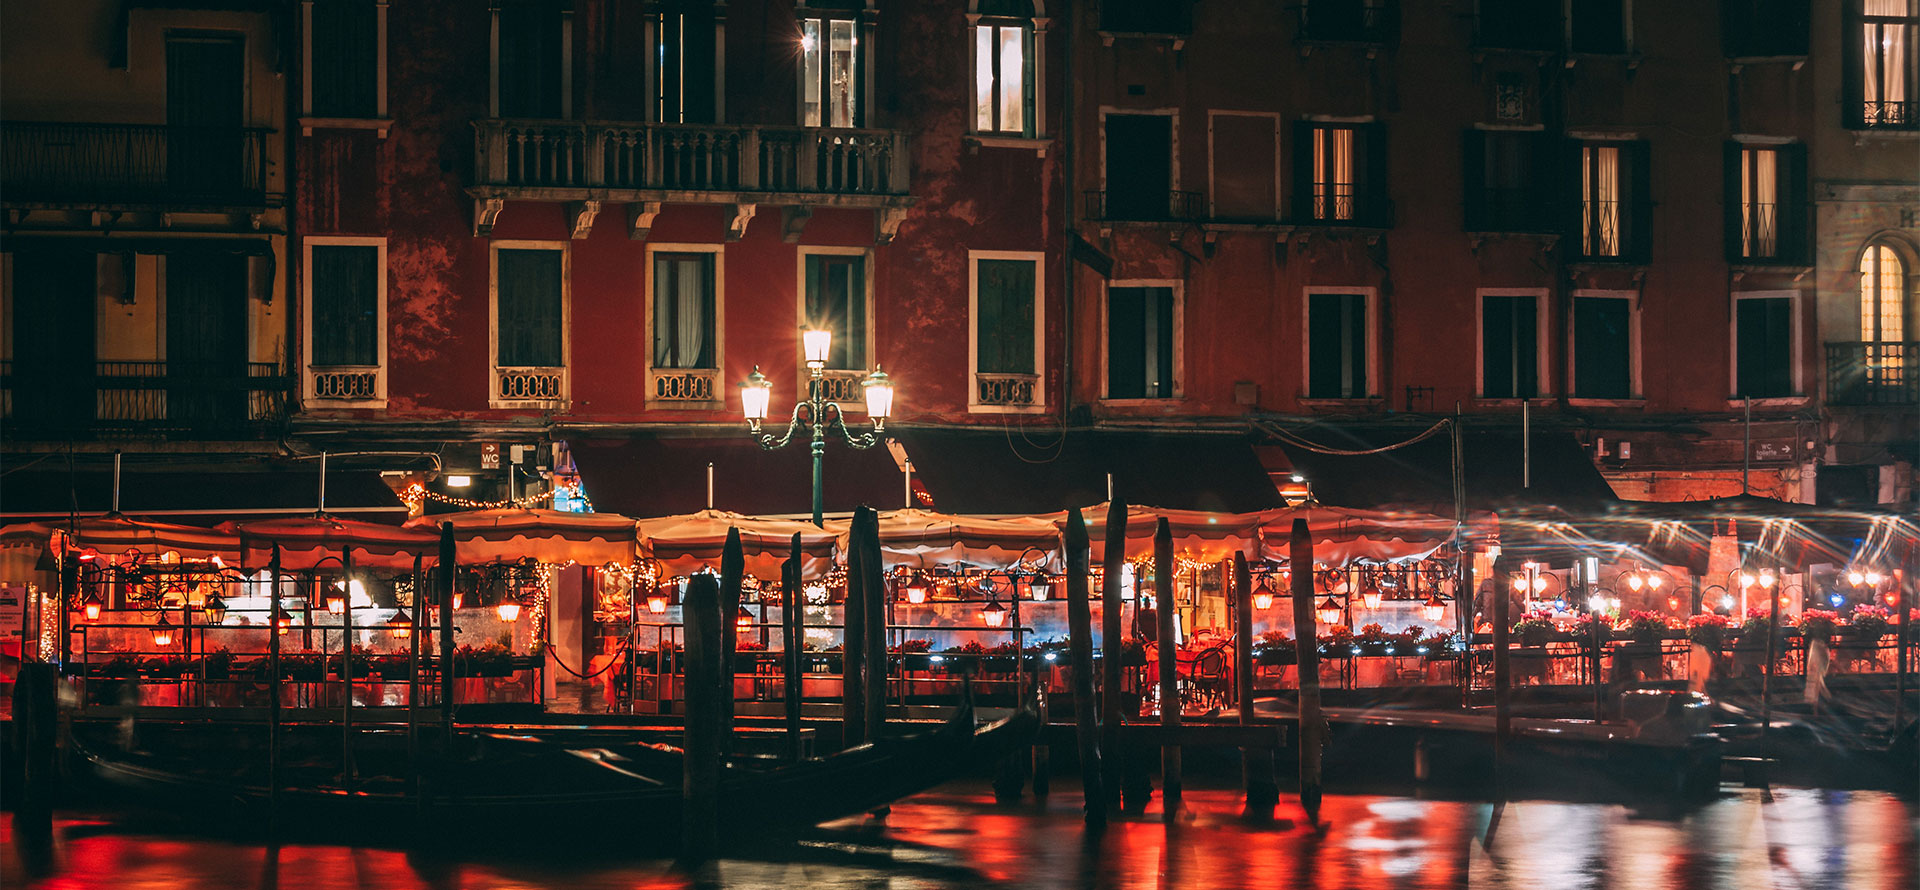 Italy at night.